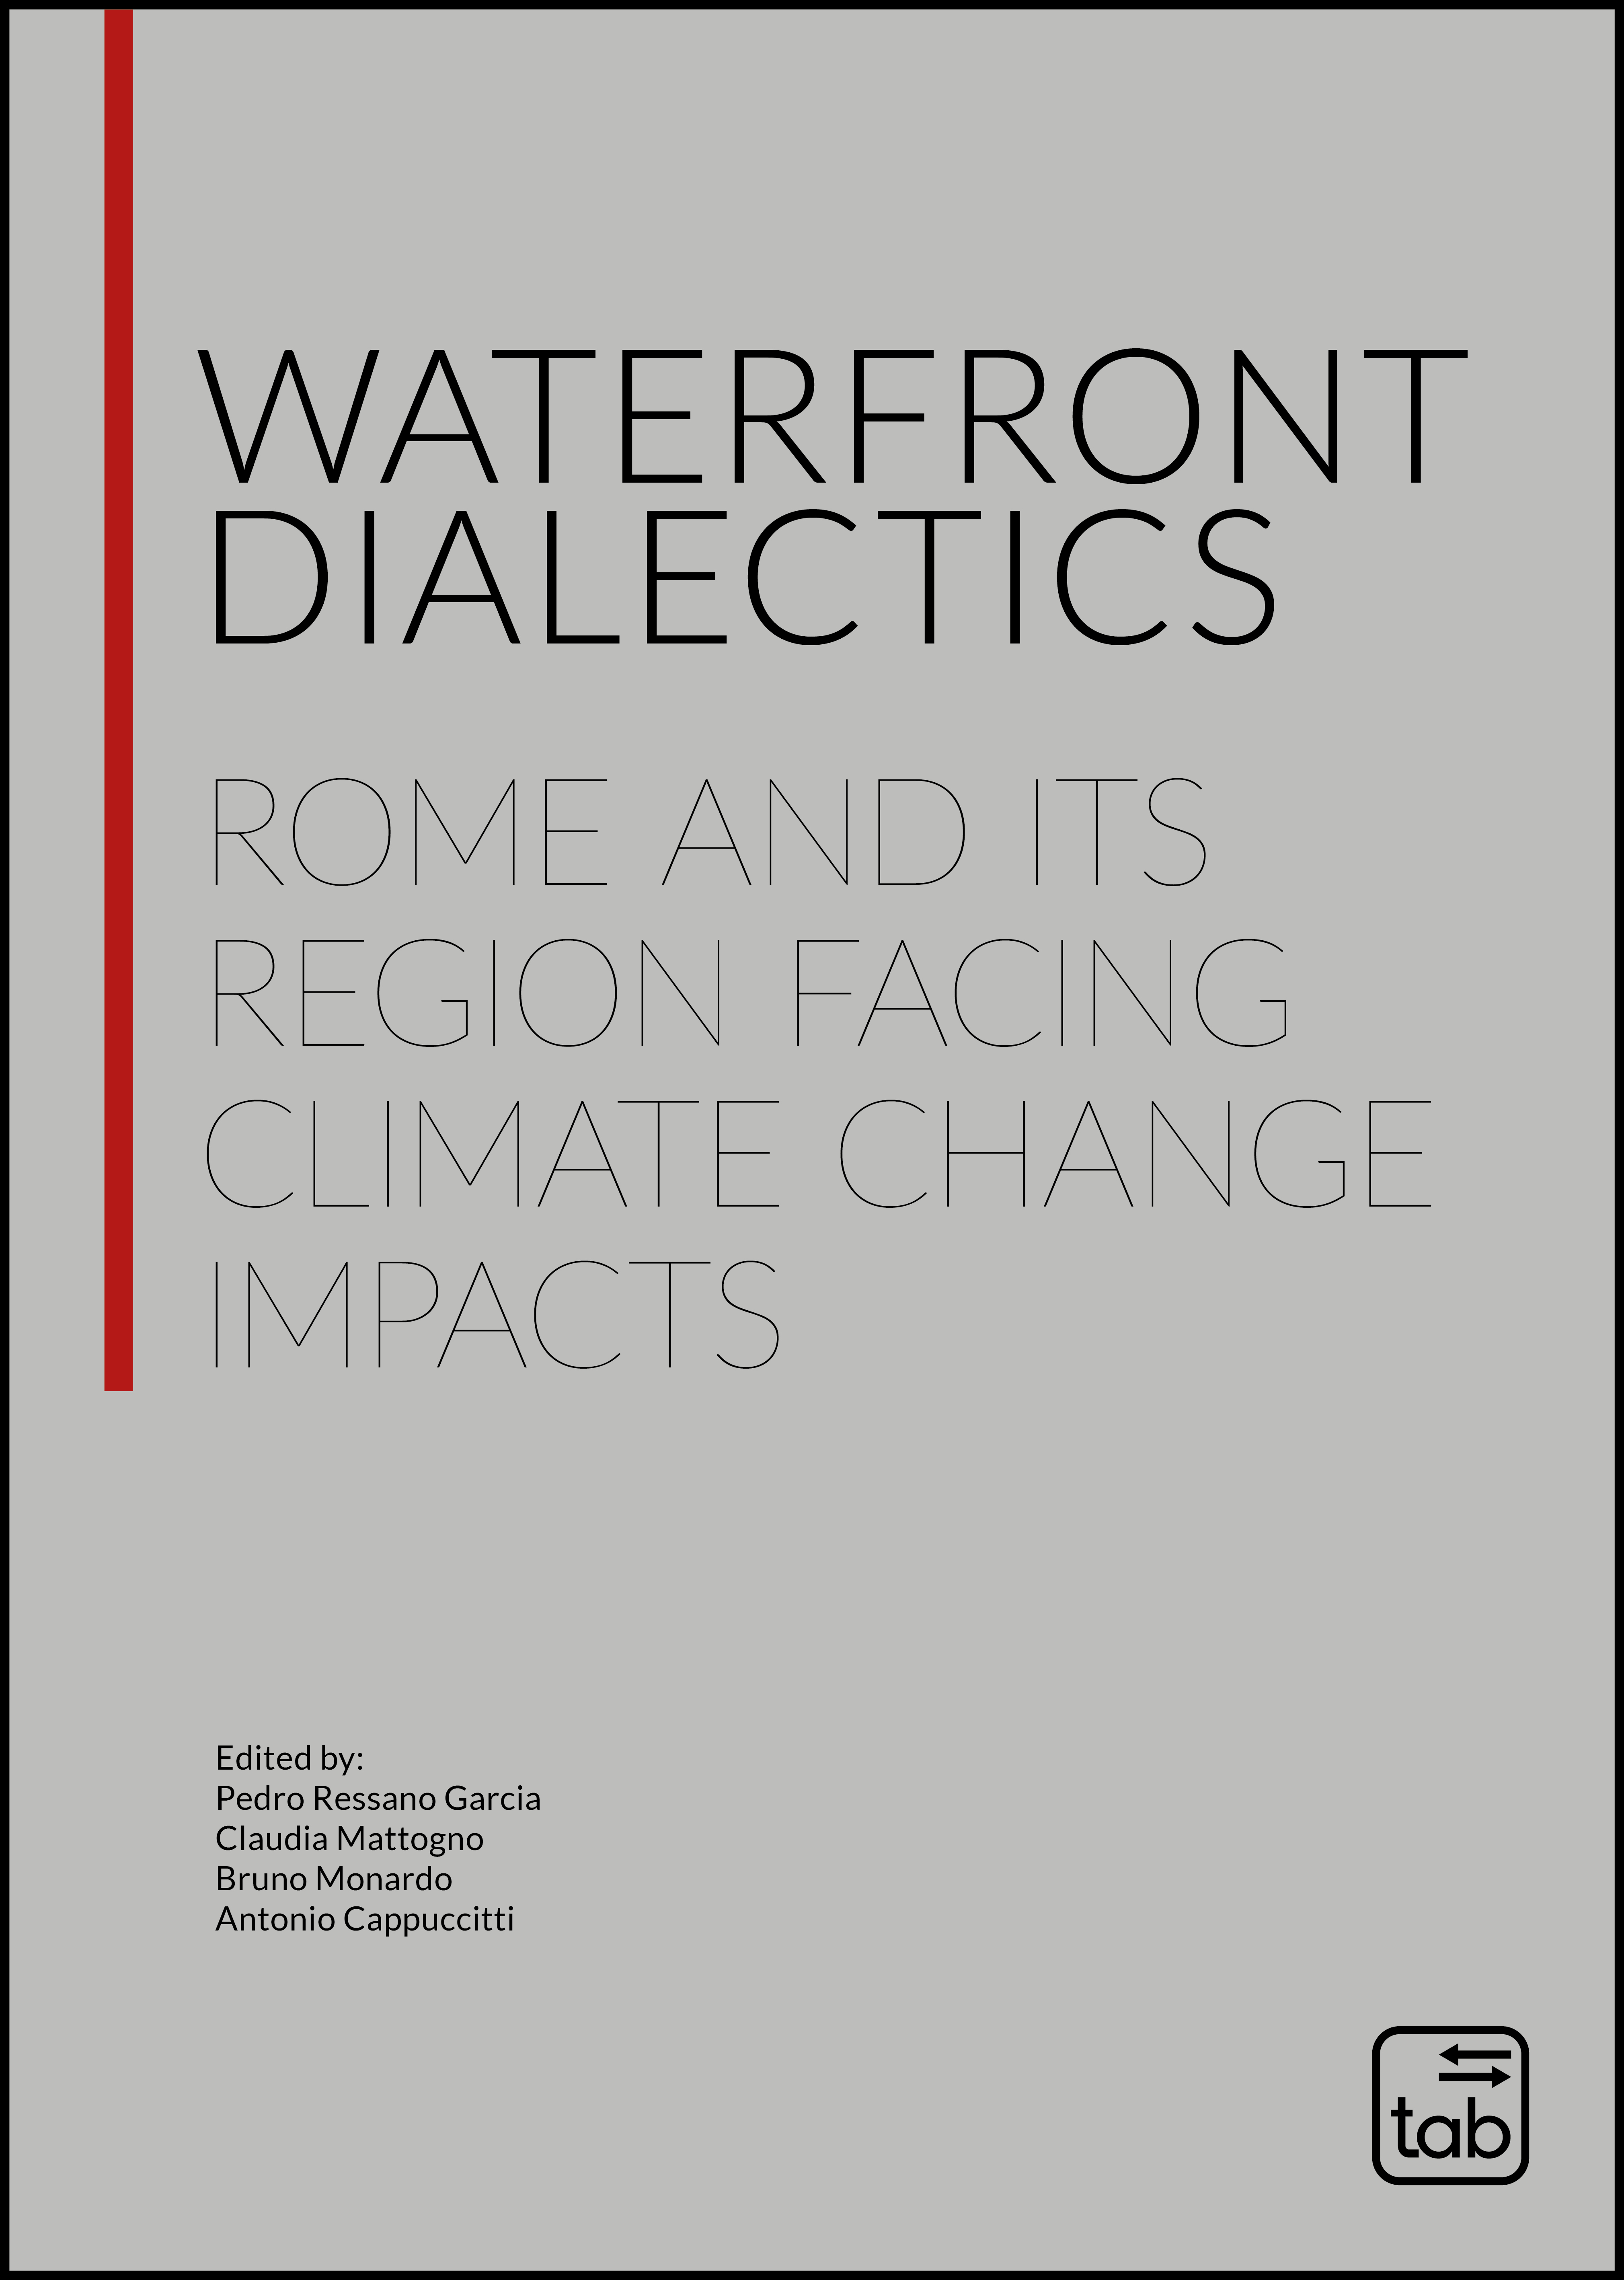 Waterfront Dialectics